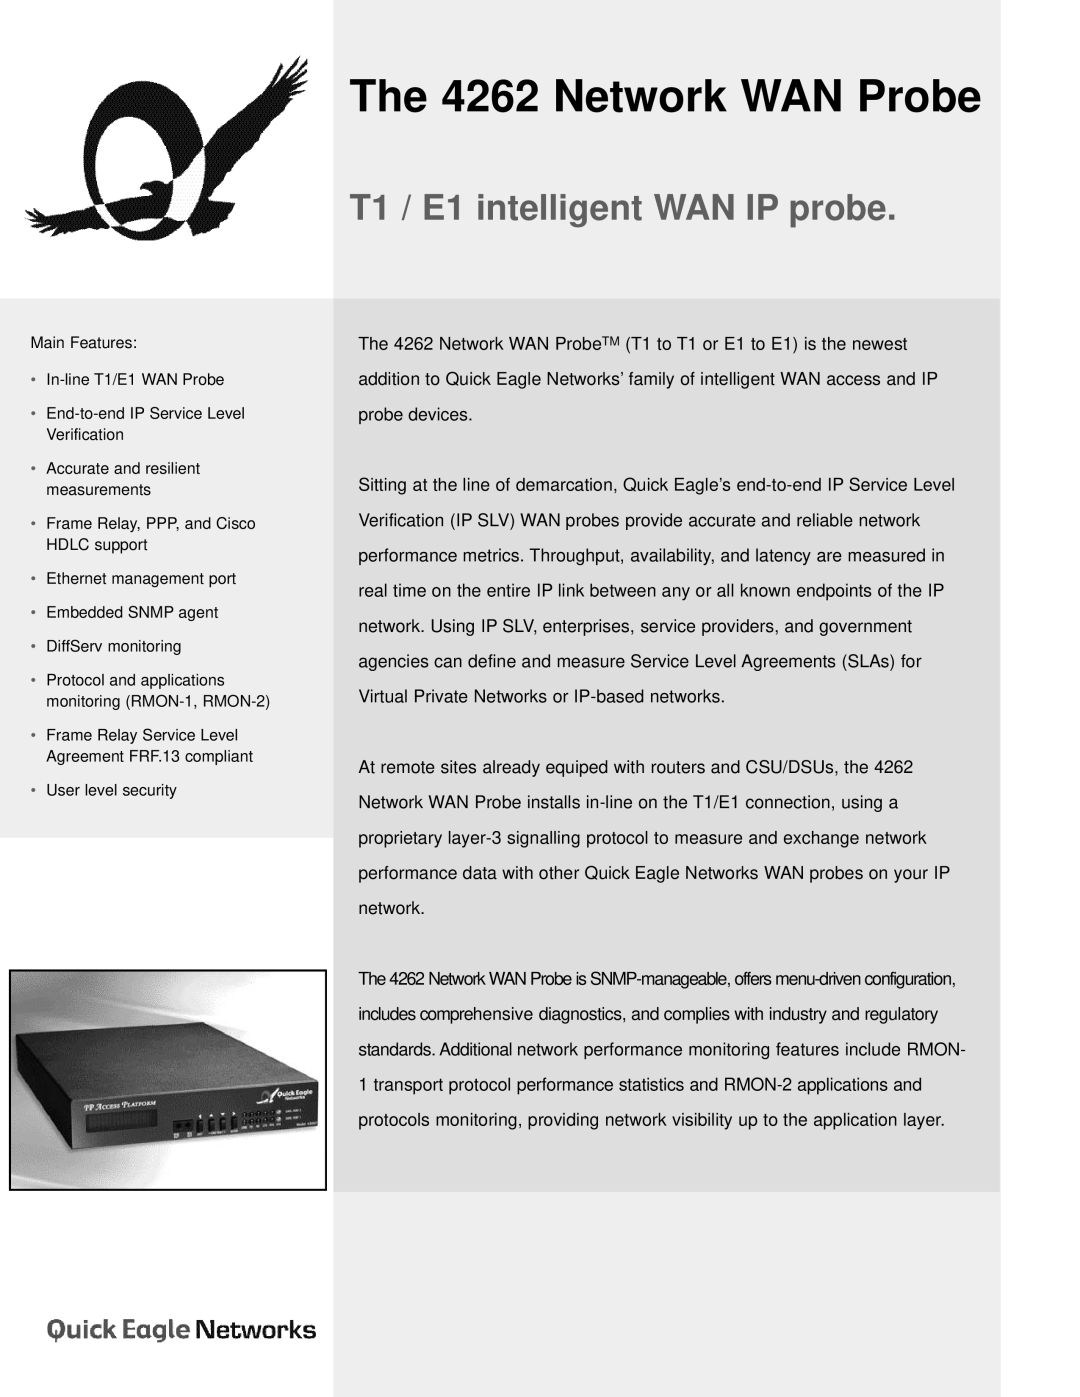 Quick Eagle Networks manual The 4262 Network WAN Probe, T1 / E1 intelligent WAN IP probe 